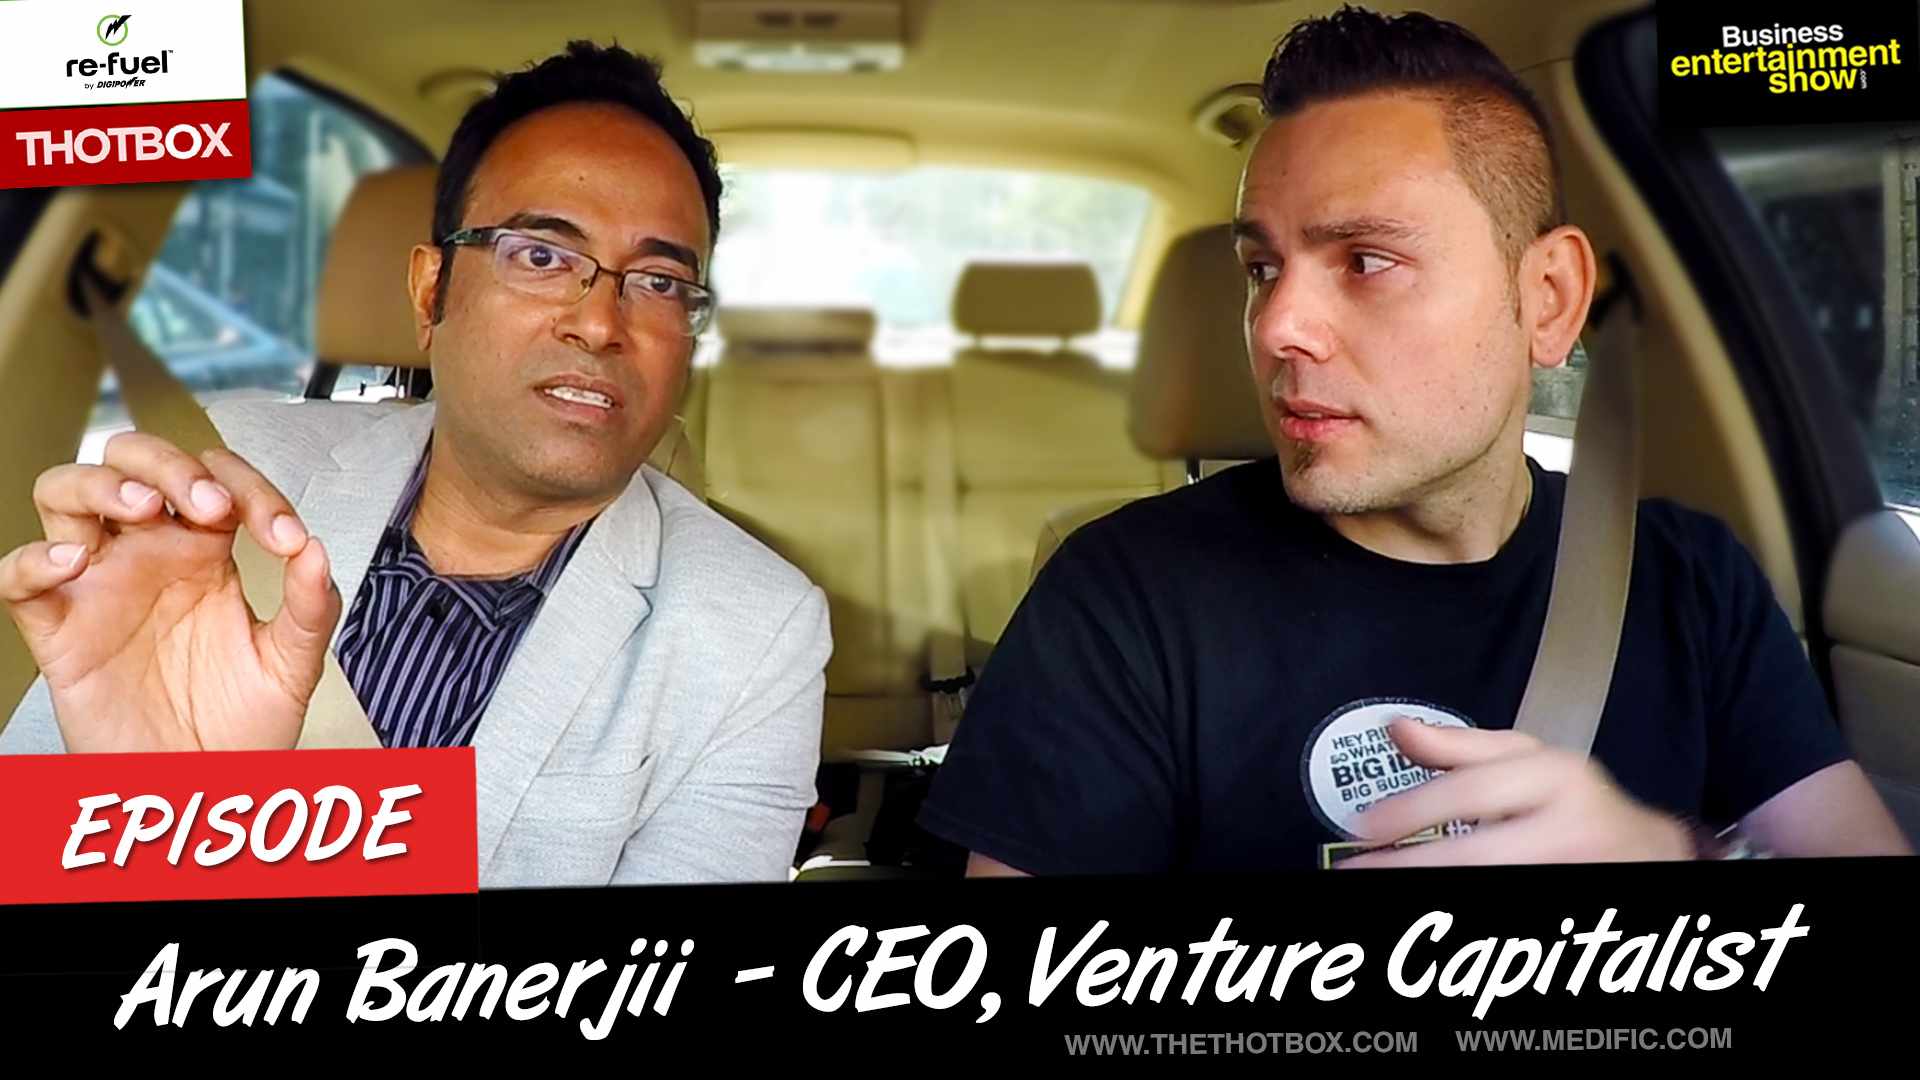 Entrepreneur Interview - Fintech CEO Arun Banerjii on Business Entertainment Show